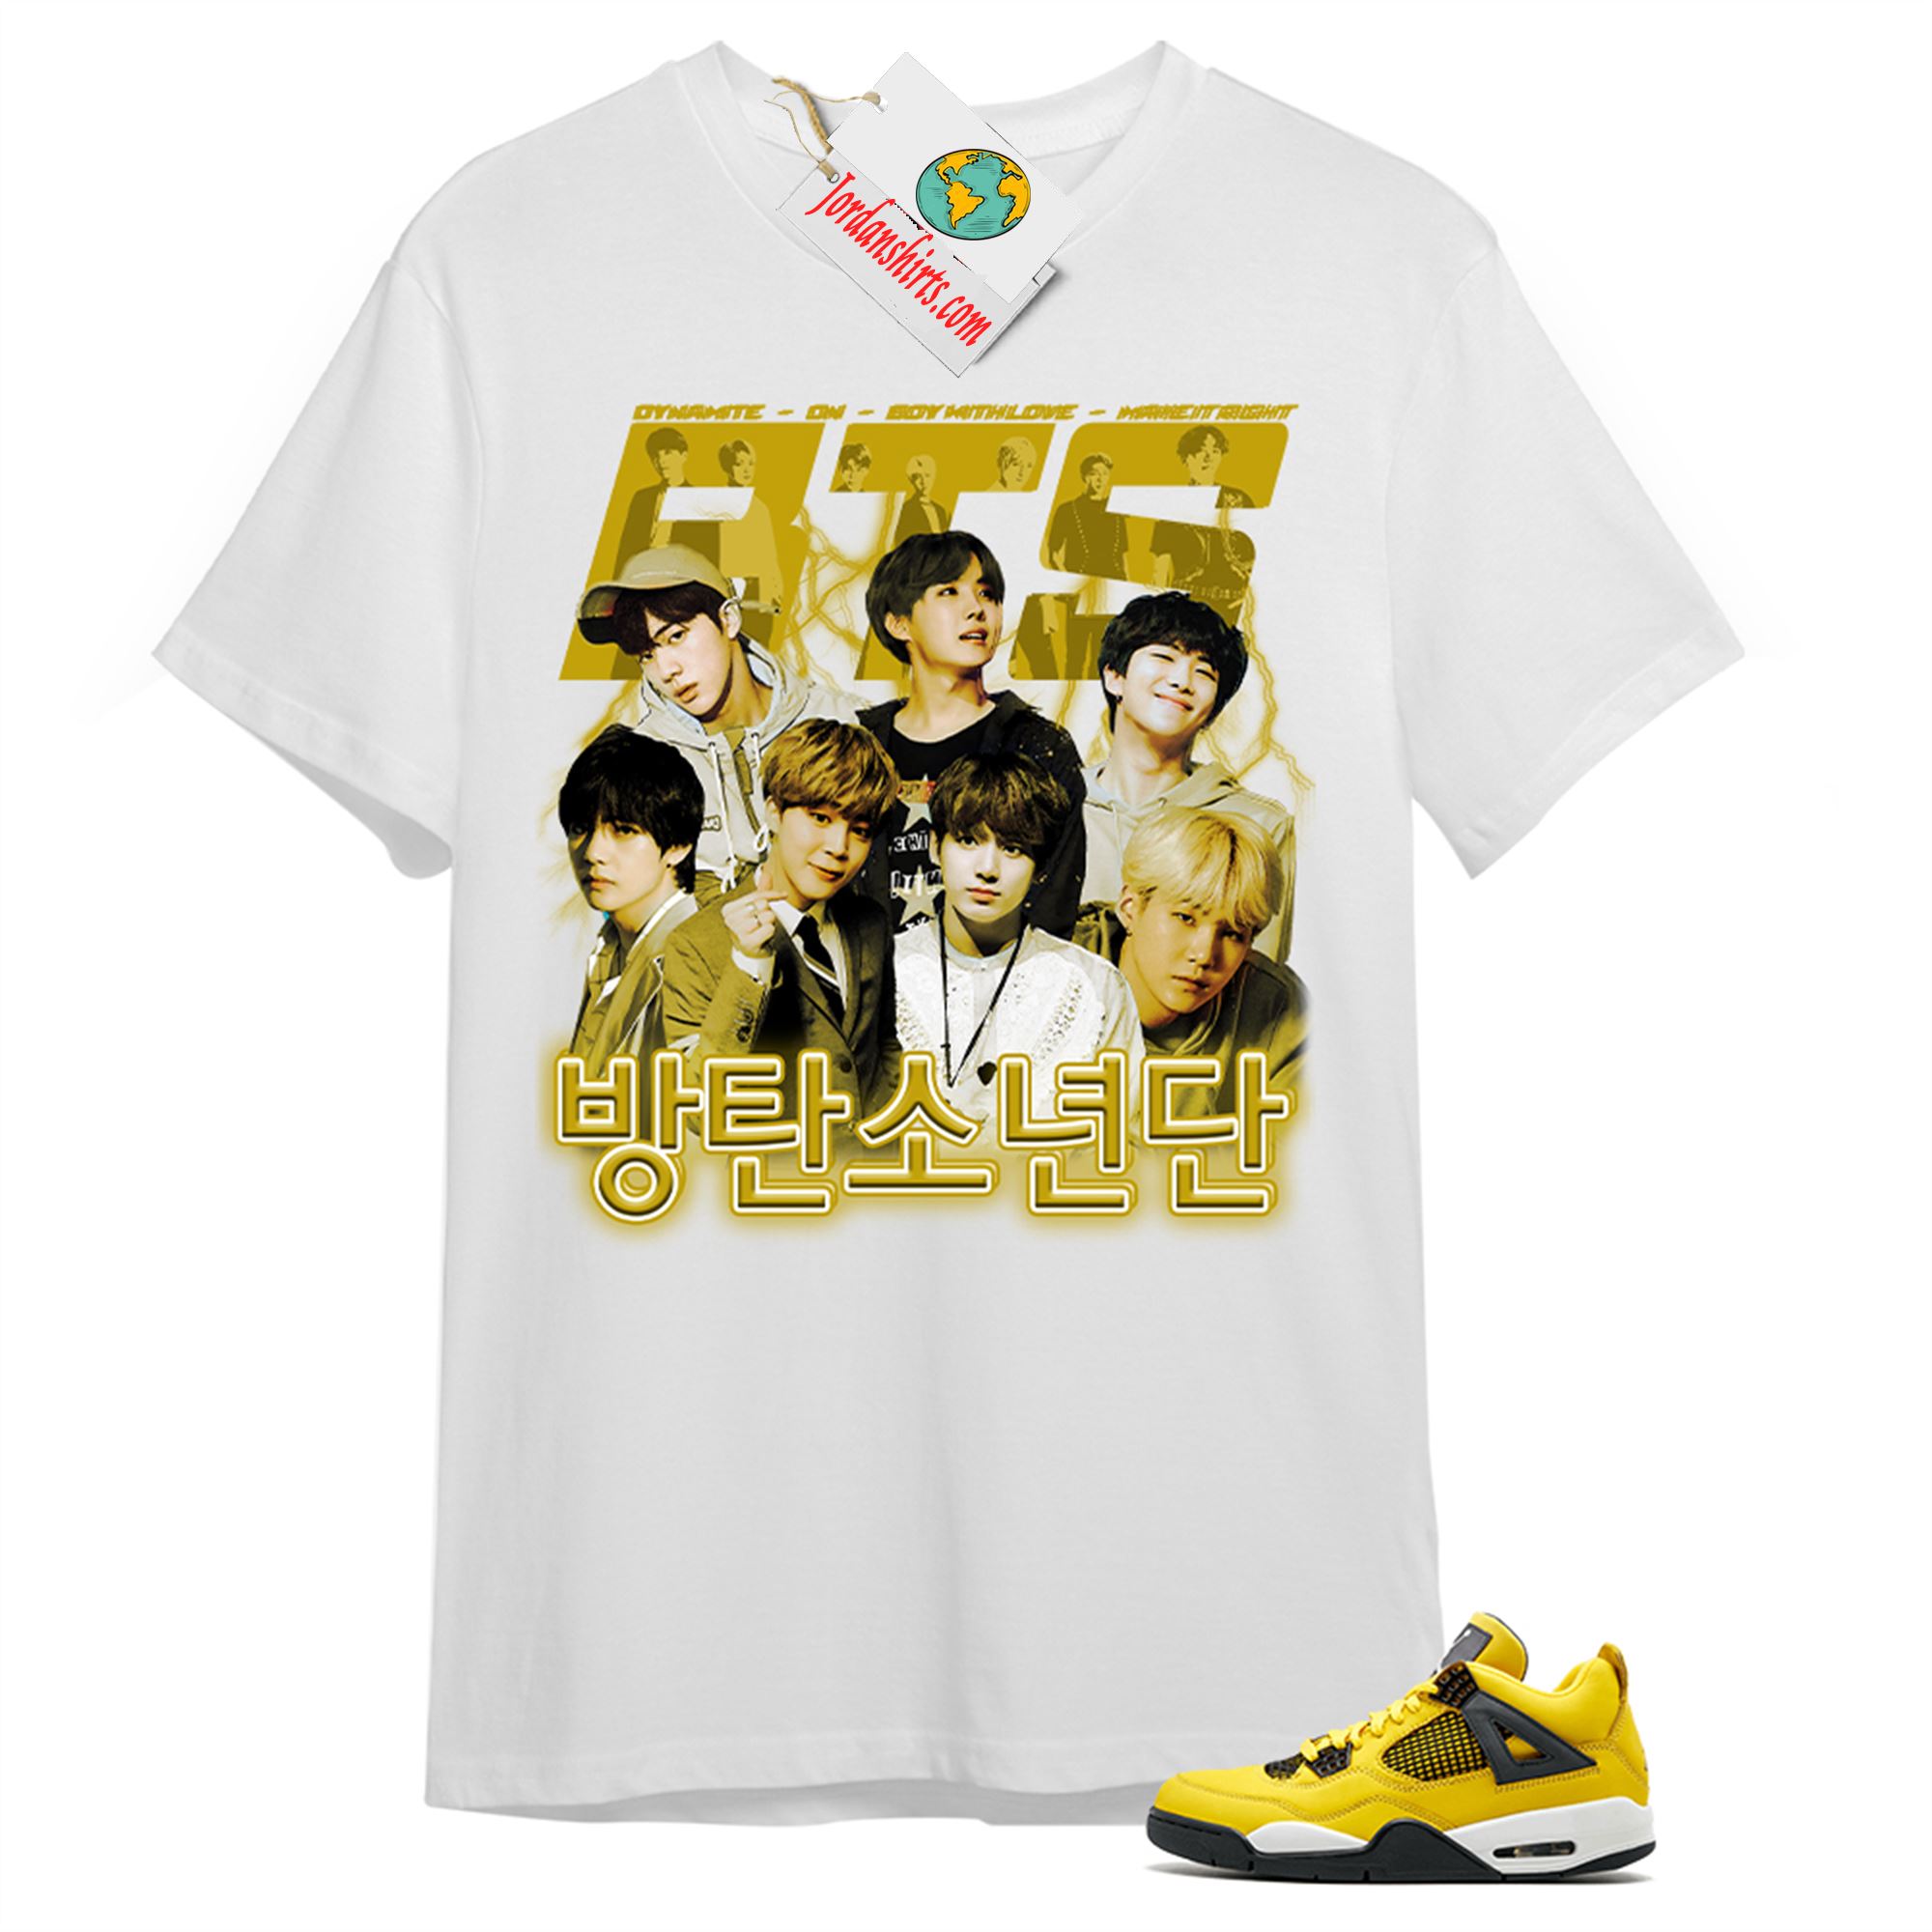 Jordan 4 Shirt, Bangtan Boys Bts Vintage White T-shirt Air Jordan 4 Tour Yellow Lightning 4s Size Up To 5xl